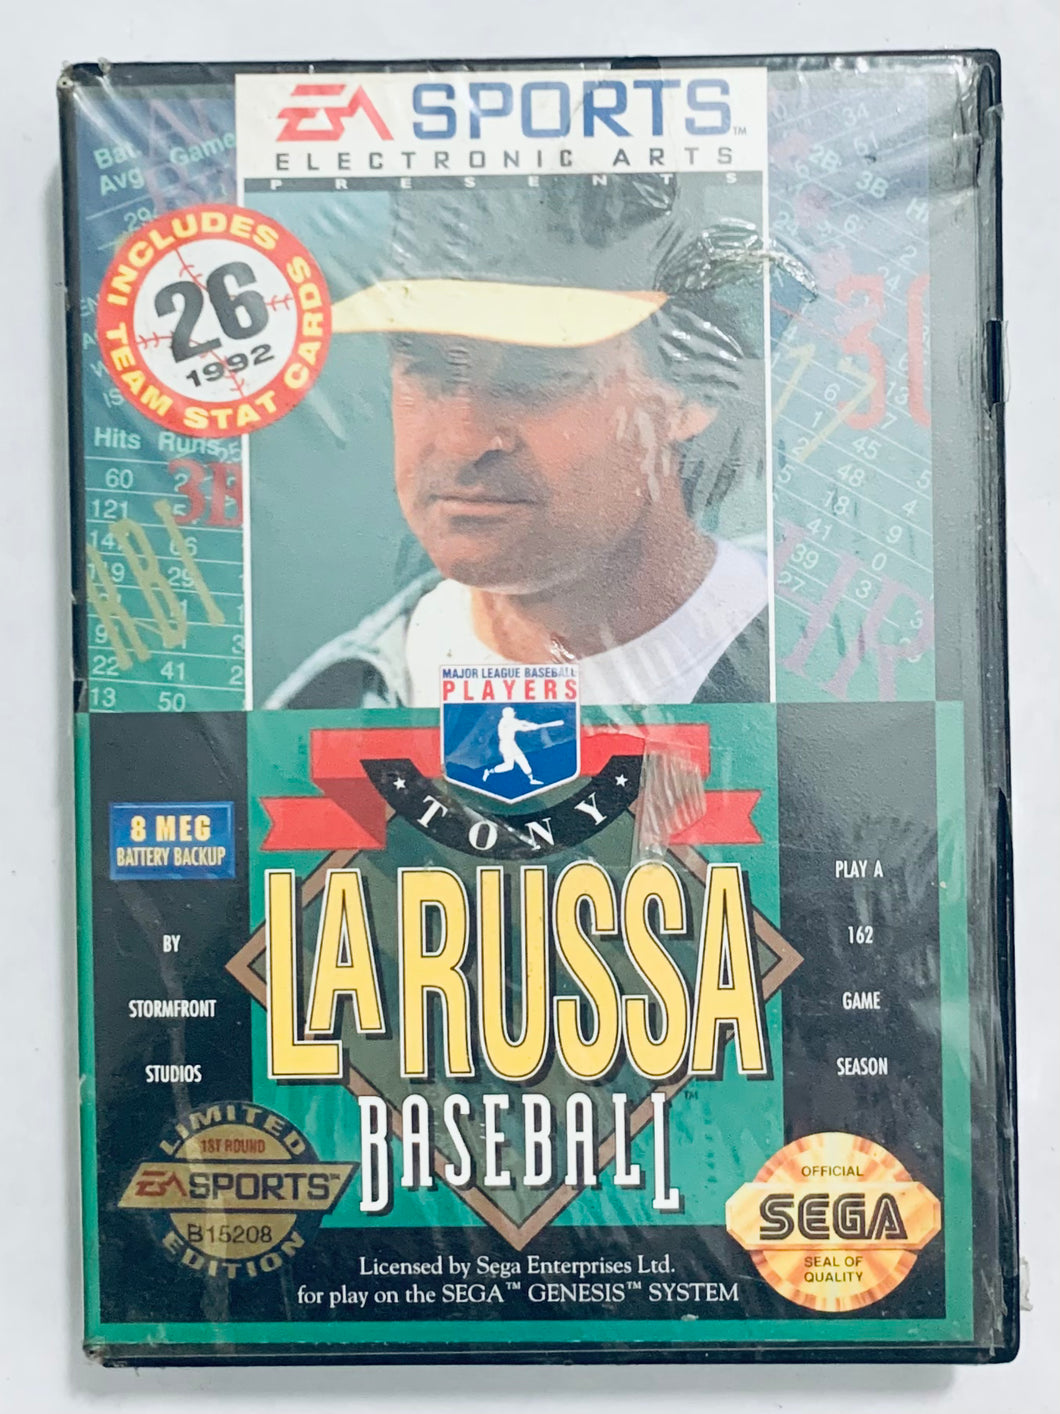 Tony La Russa Baseball Limited Edition - Sega Genesis - NTSC - Brand New (7137)